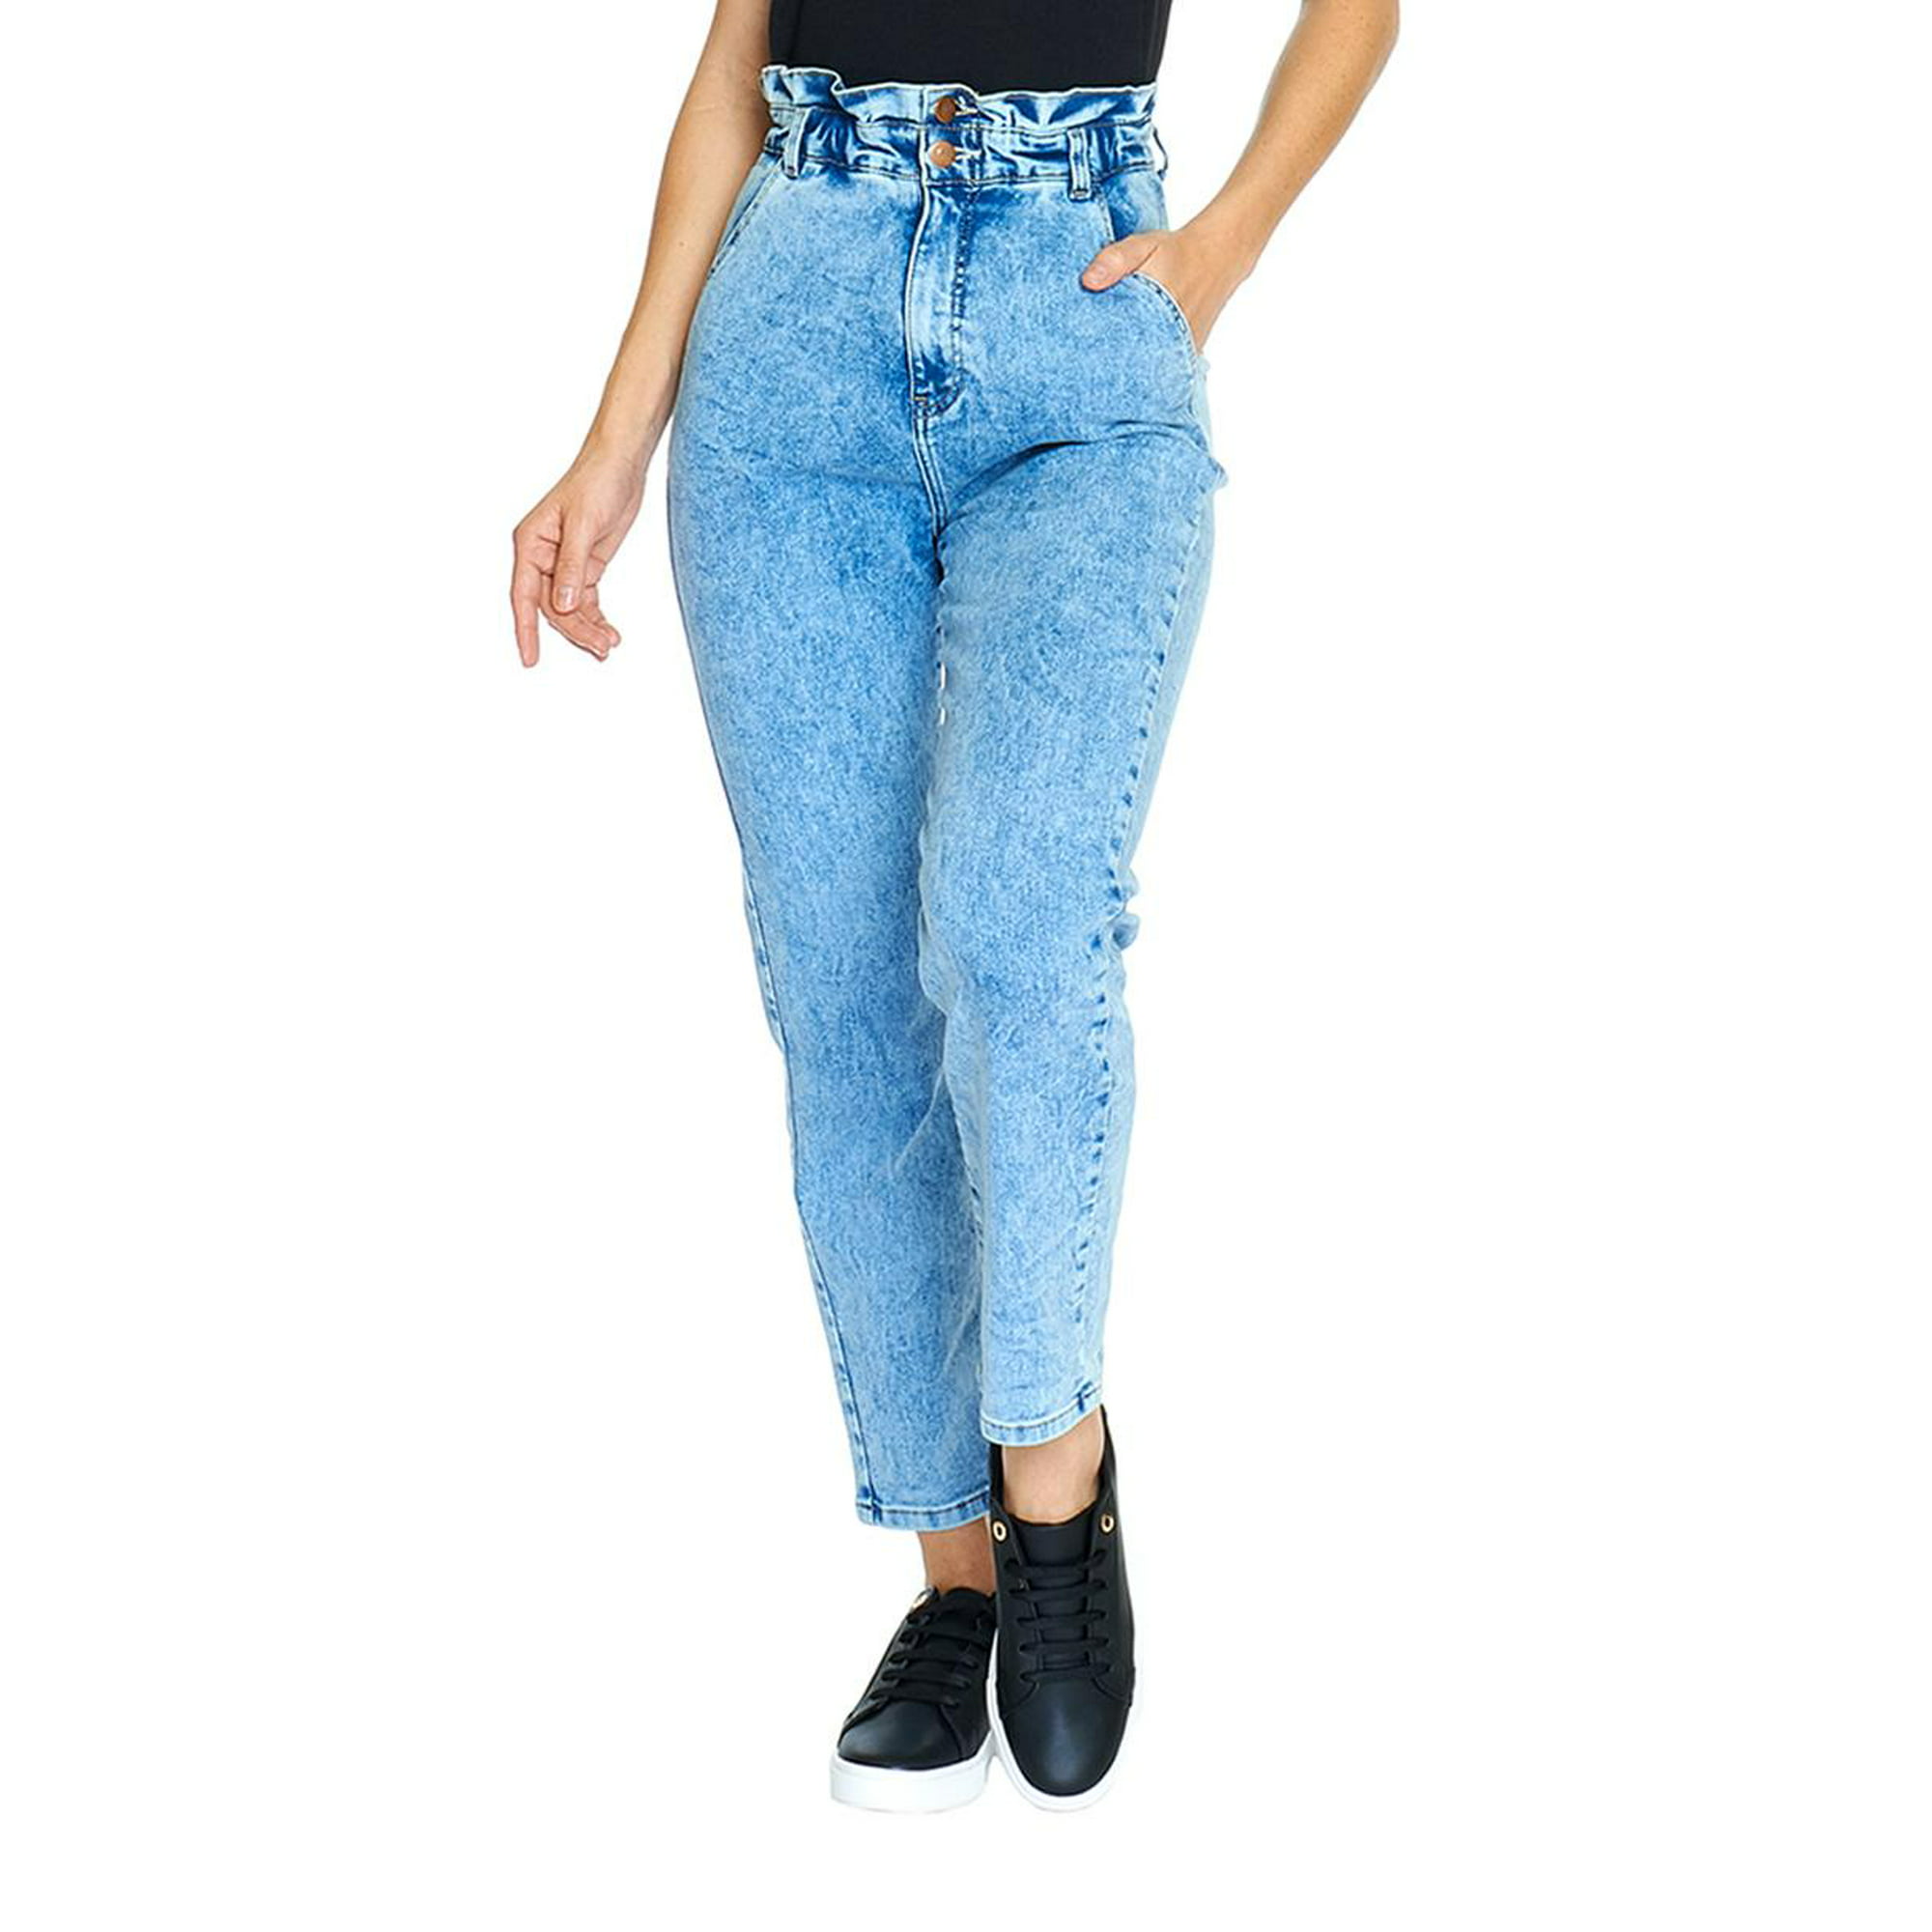 Ewell Incomparable Paralizar Pantalón Mom Jeans Mujer Fit Mezclilla Stretch Alto Con Resorte Stone gris  7 Incógnita 110096 | Walmart en línea